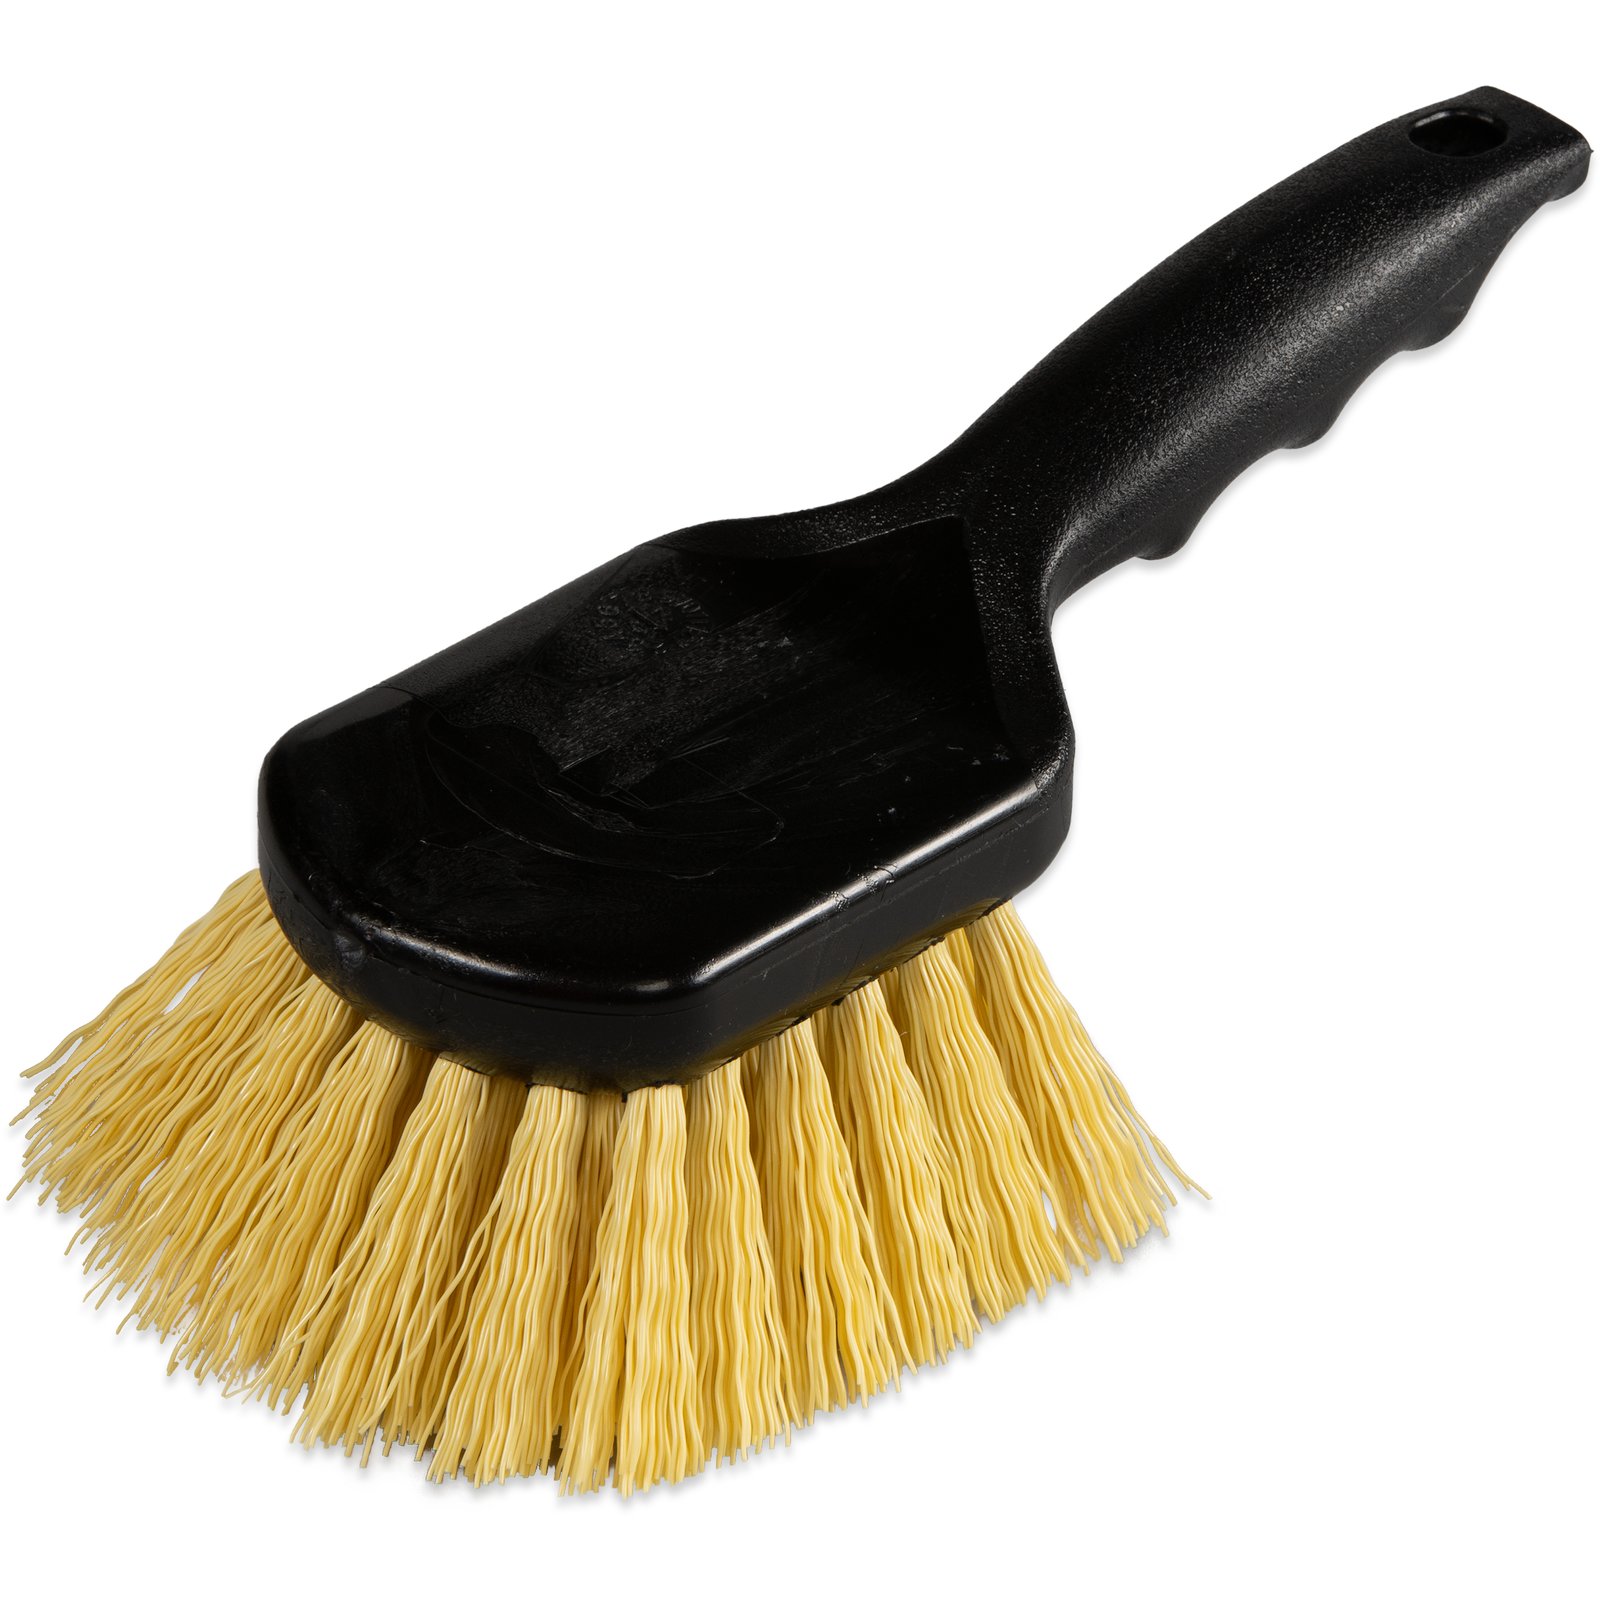 Choice 20 Black Nylon Utility / Pot Scrub Brush